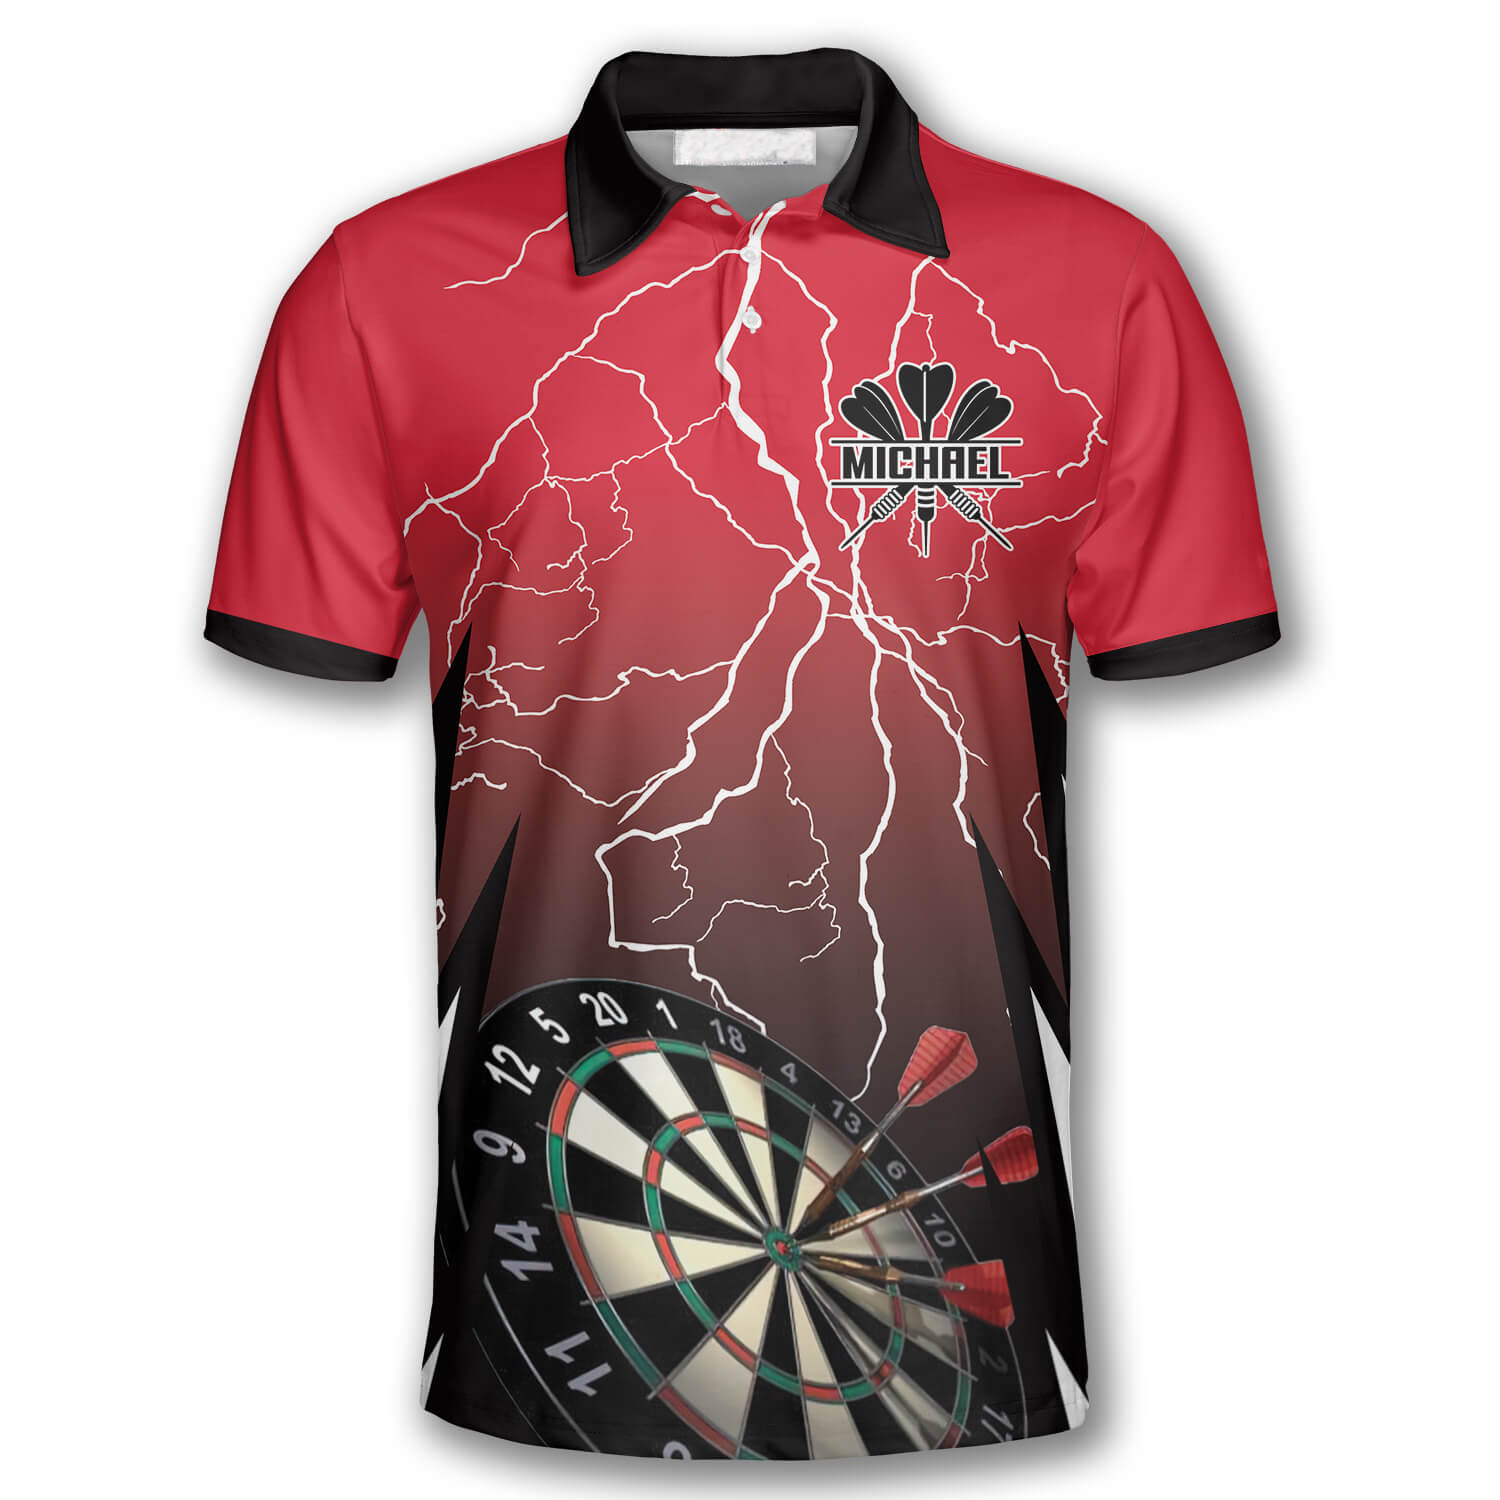 Red Lightning Custom Darts Shirts for Men/ Dart Perfection/ 9 Dart Checkout Shirt